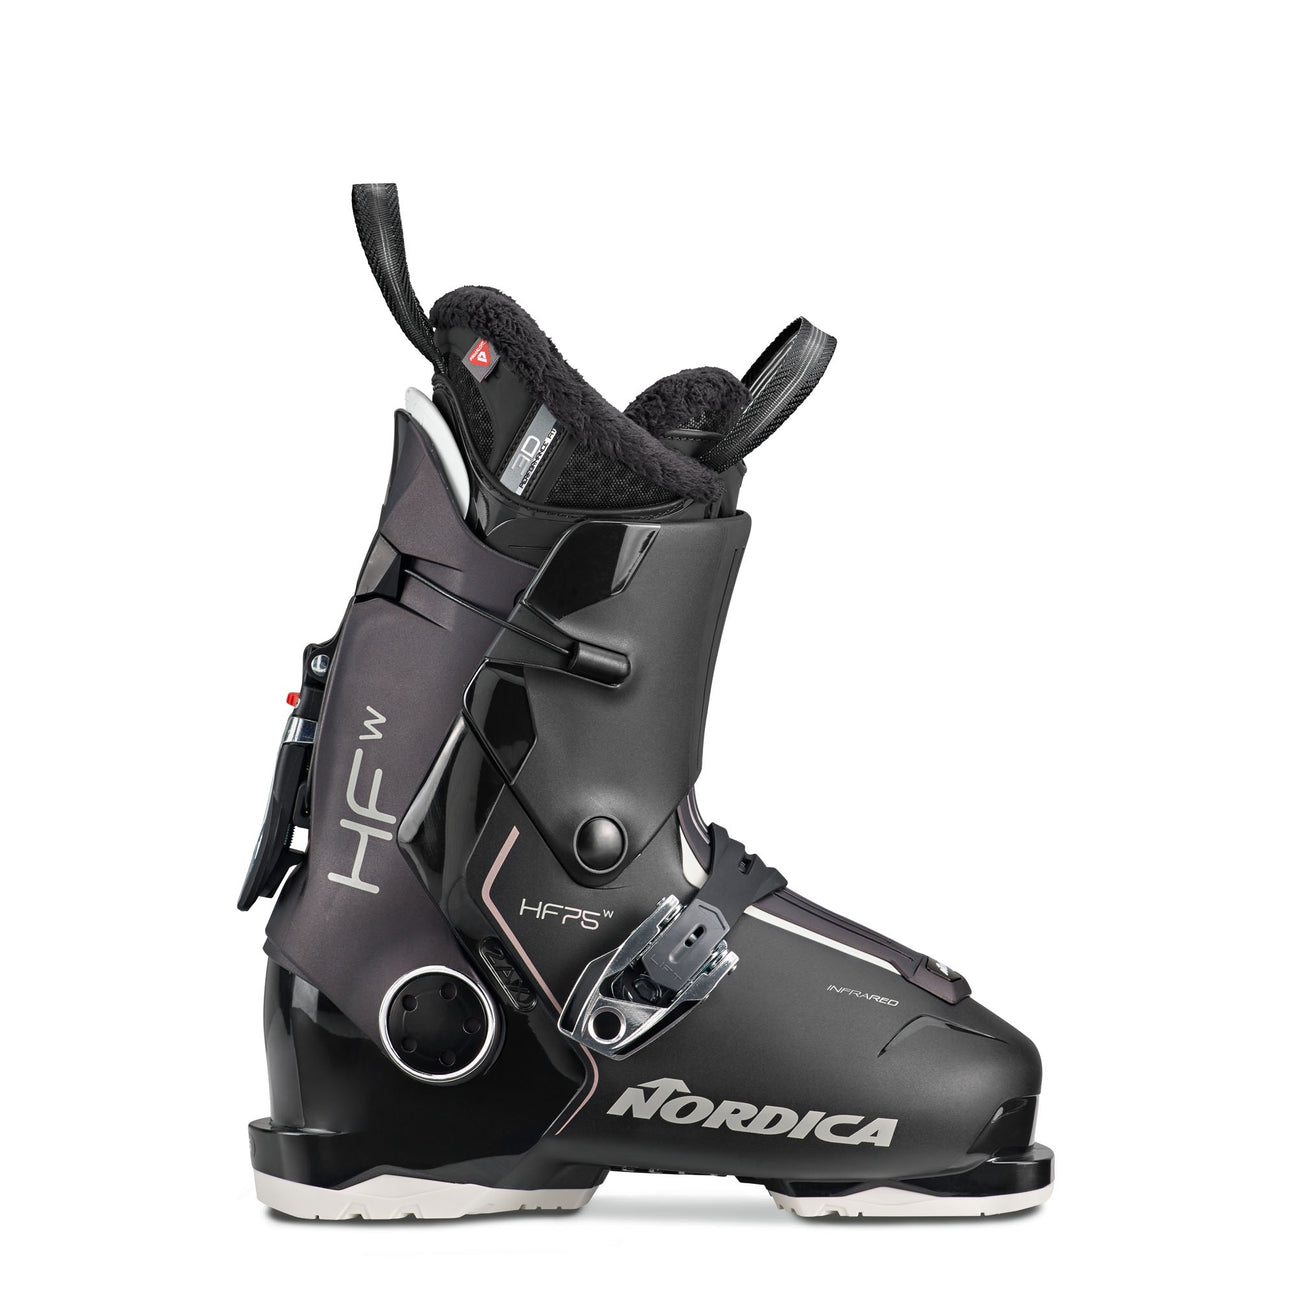 Fischer RC4 Pro LV Ski Boots 2024 - 28.5